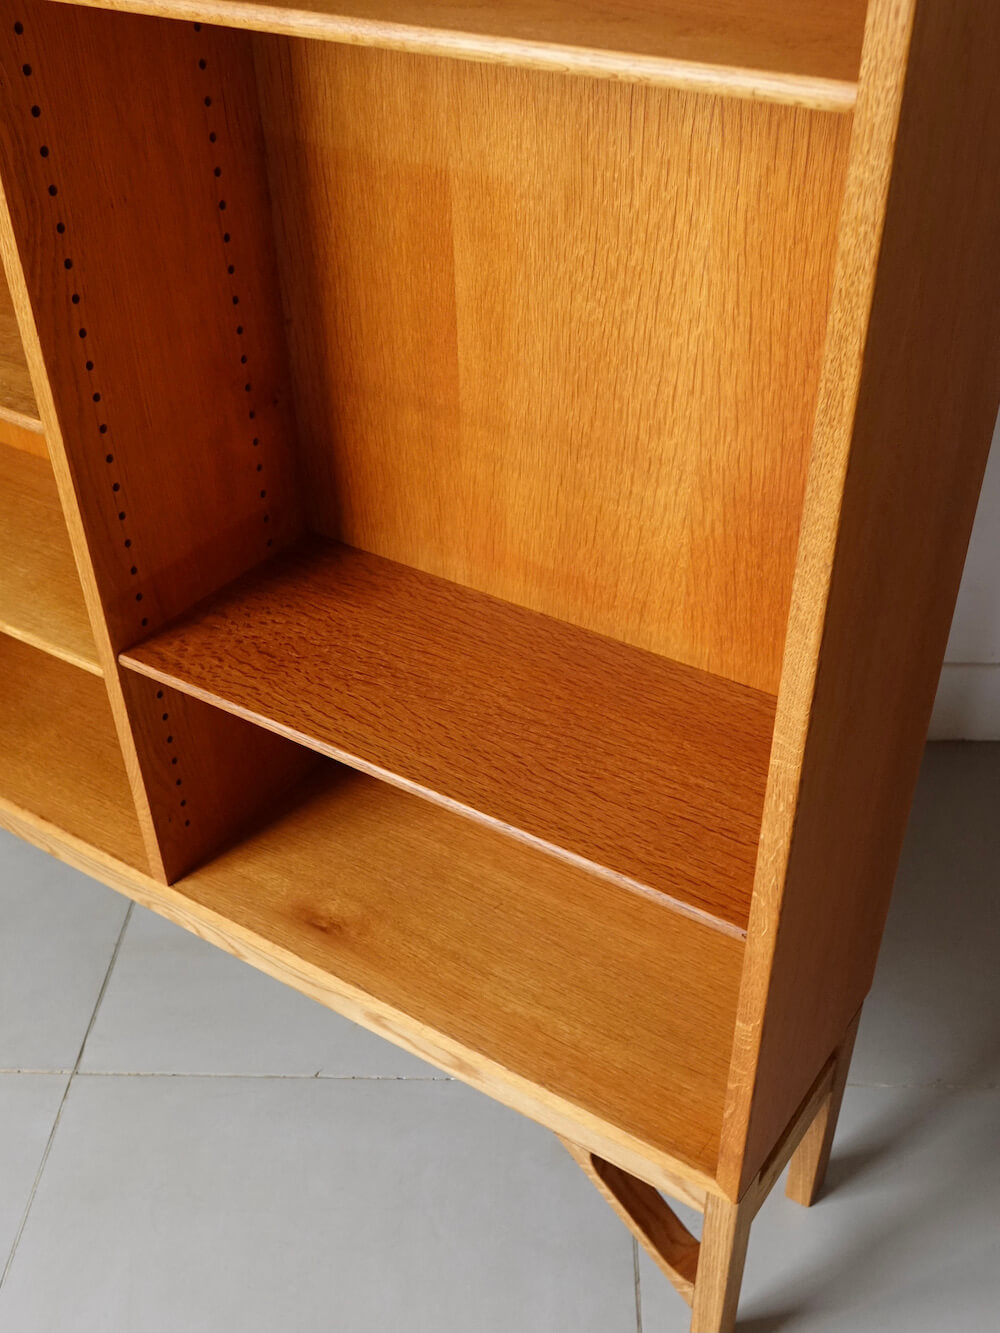 Bookcase by Borge Mogensen for FDB in oak